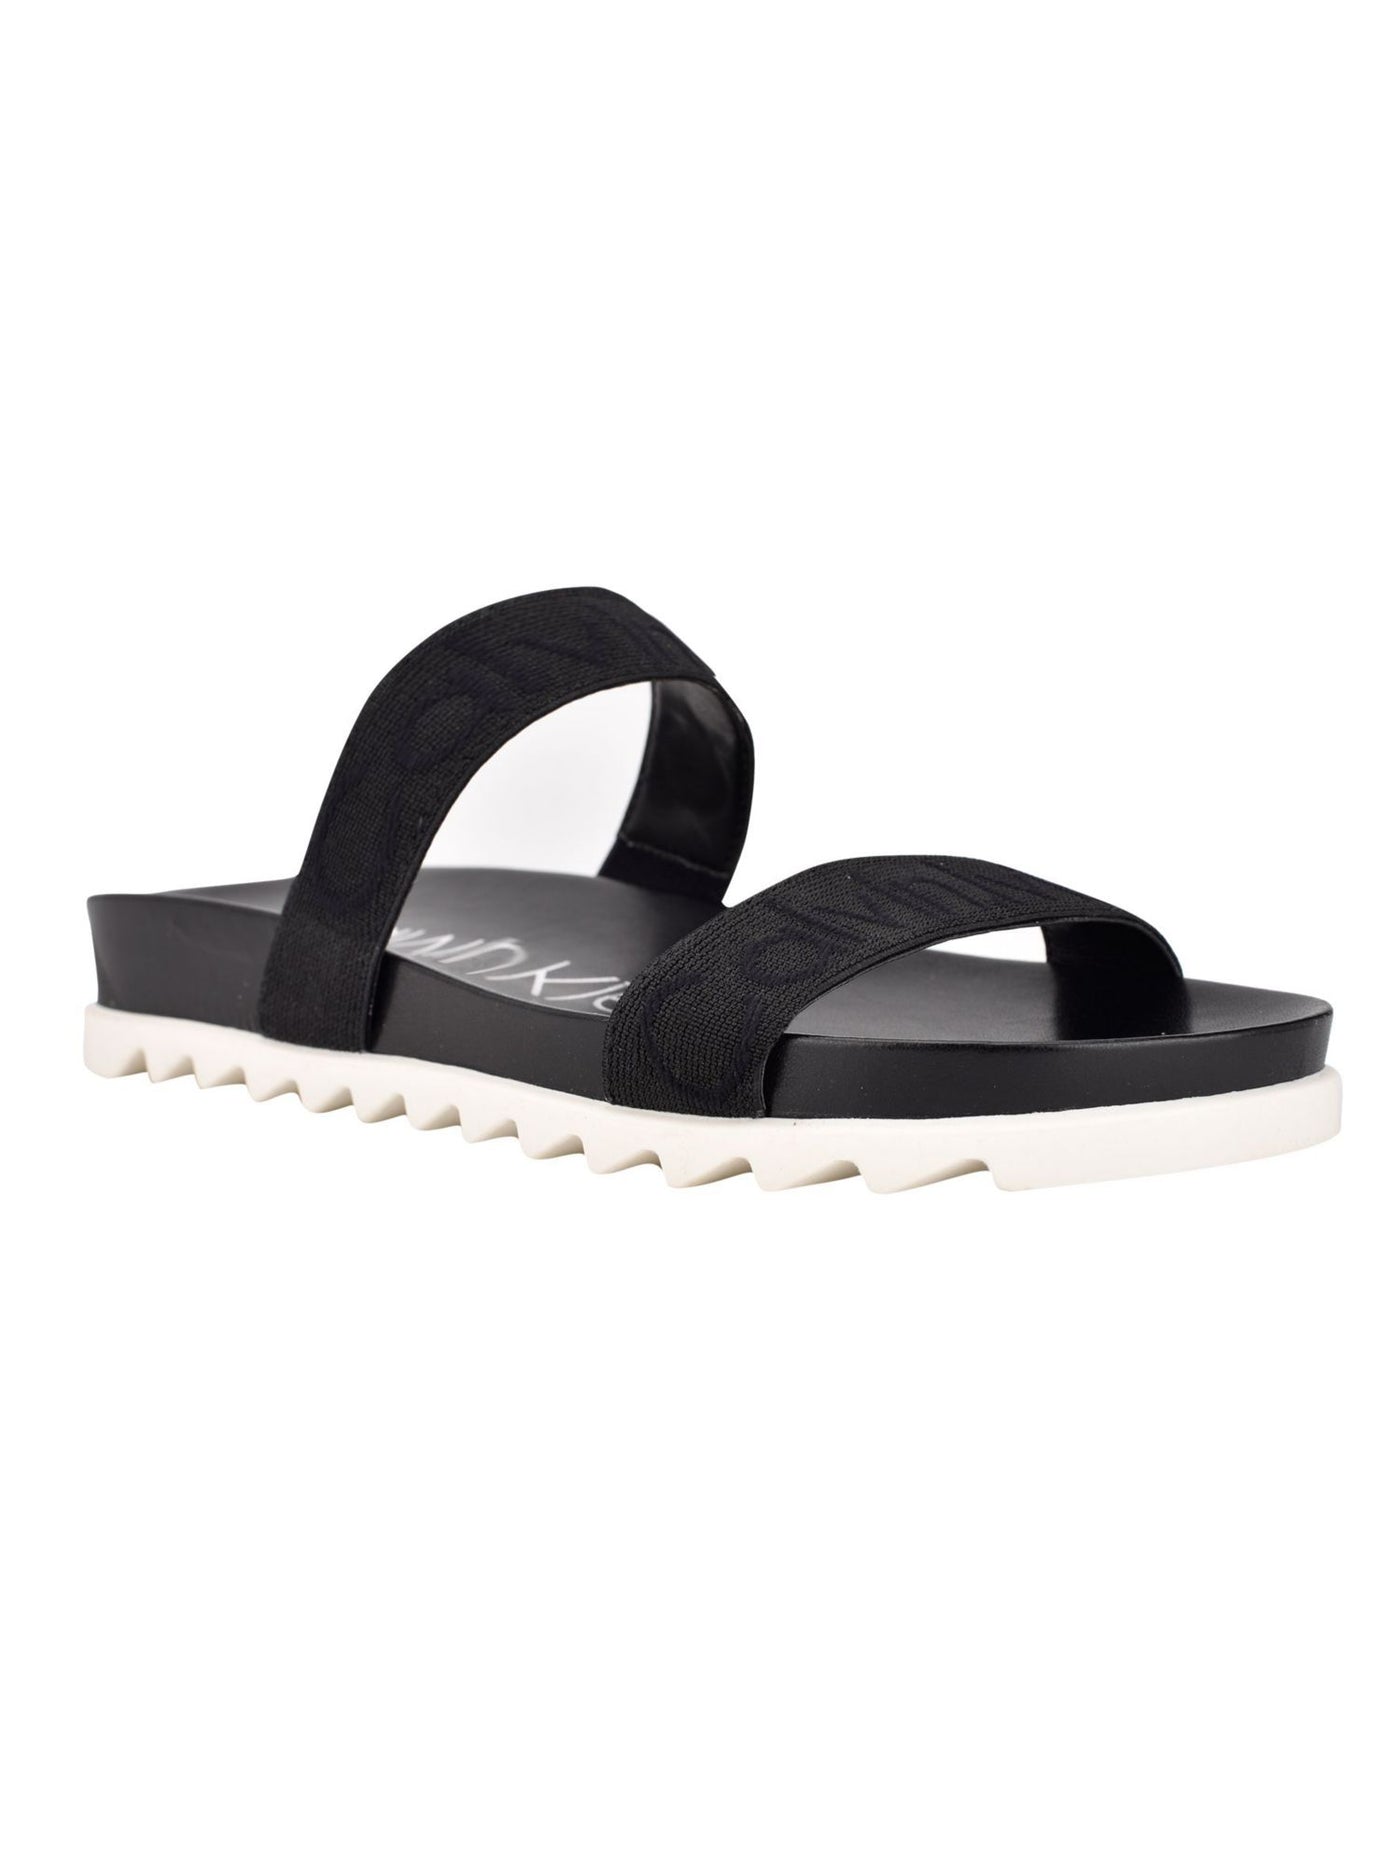 CALVIN KLEIN Womens Black Logo Treaded Comfort Carlat Round Toe Wedge Slip On Slide Sandals Shoes 6 M